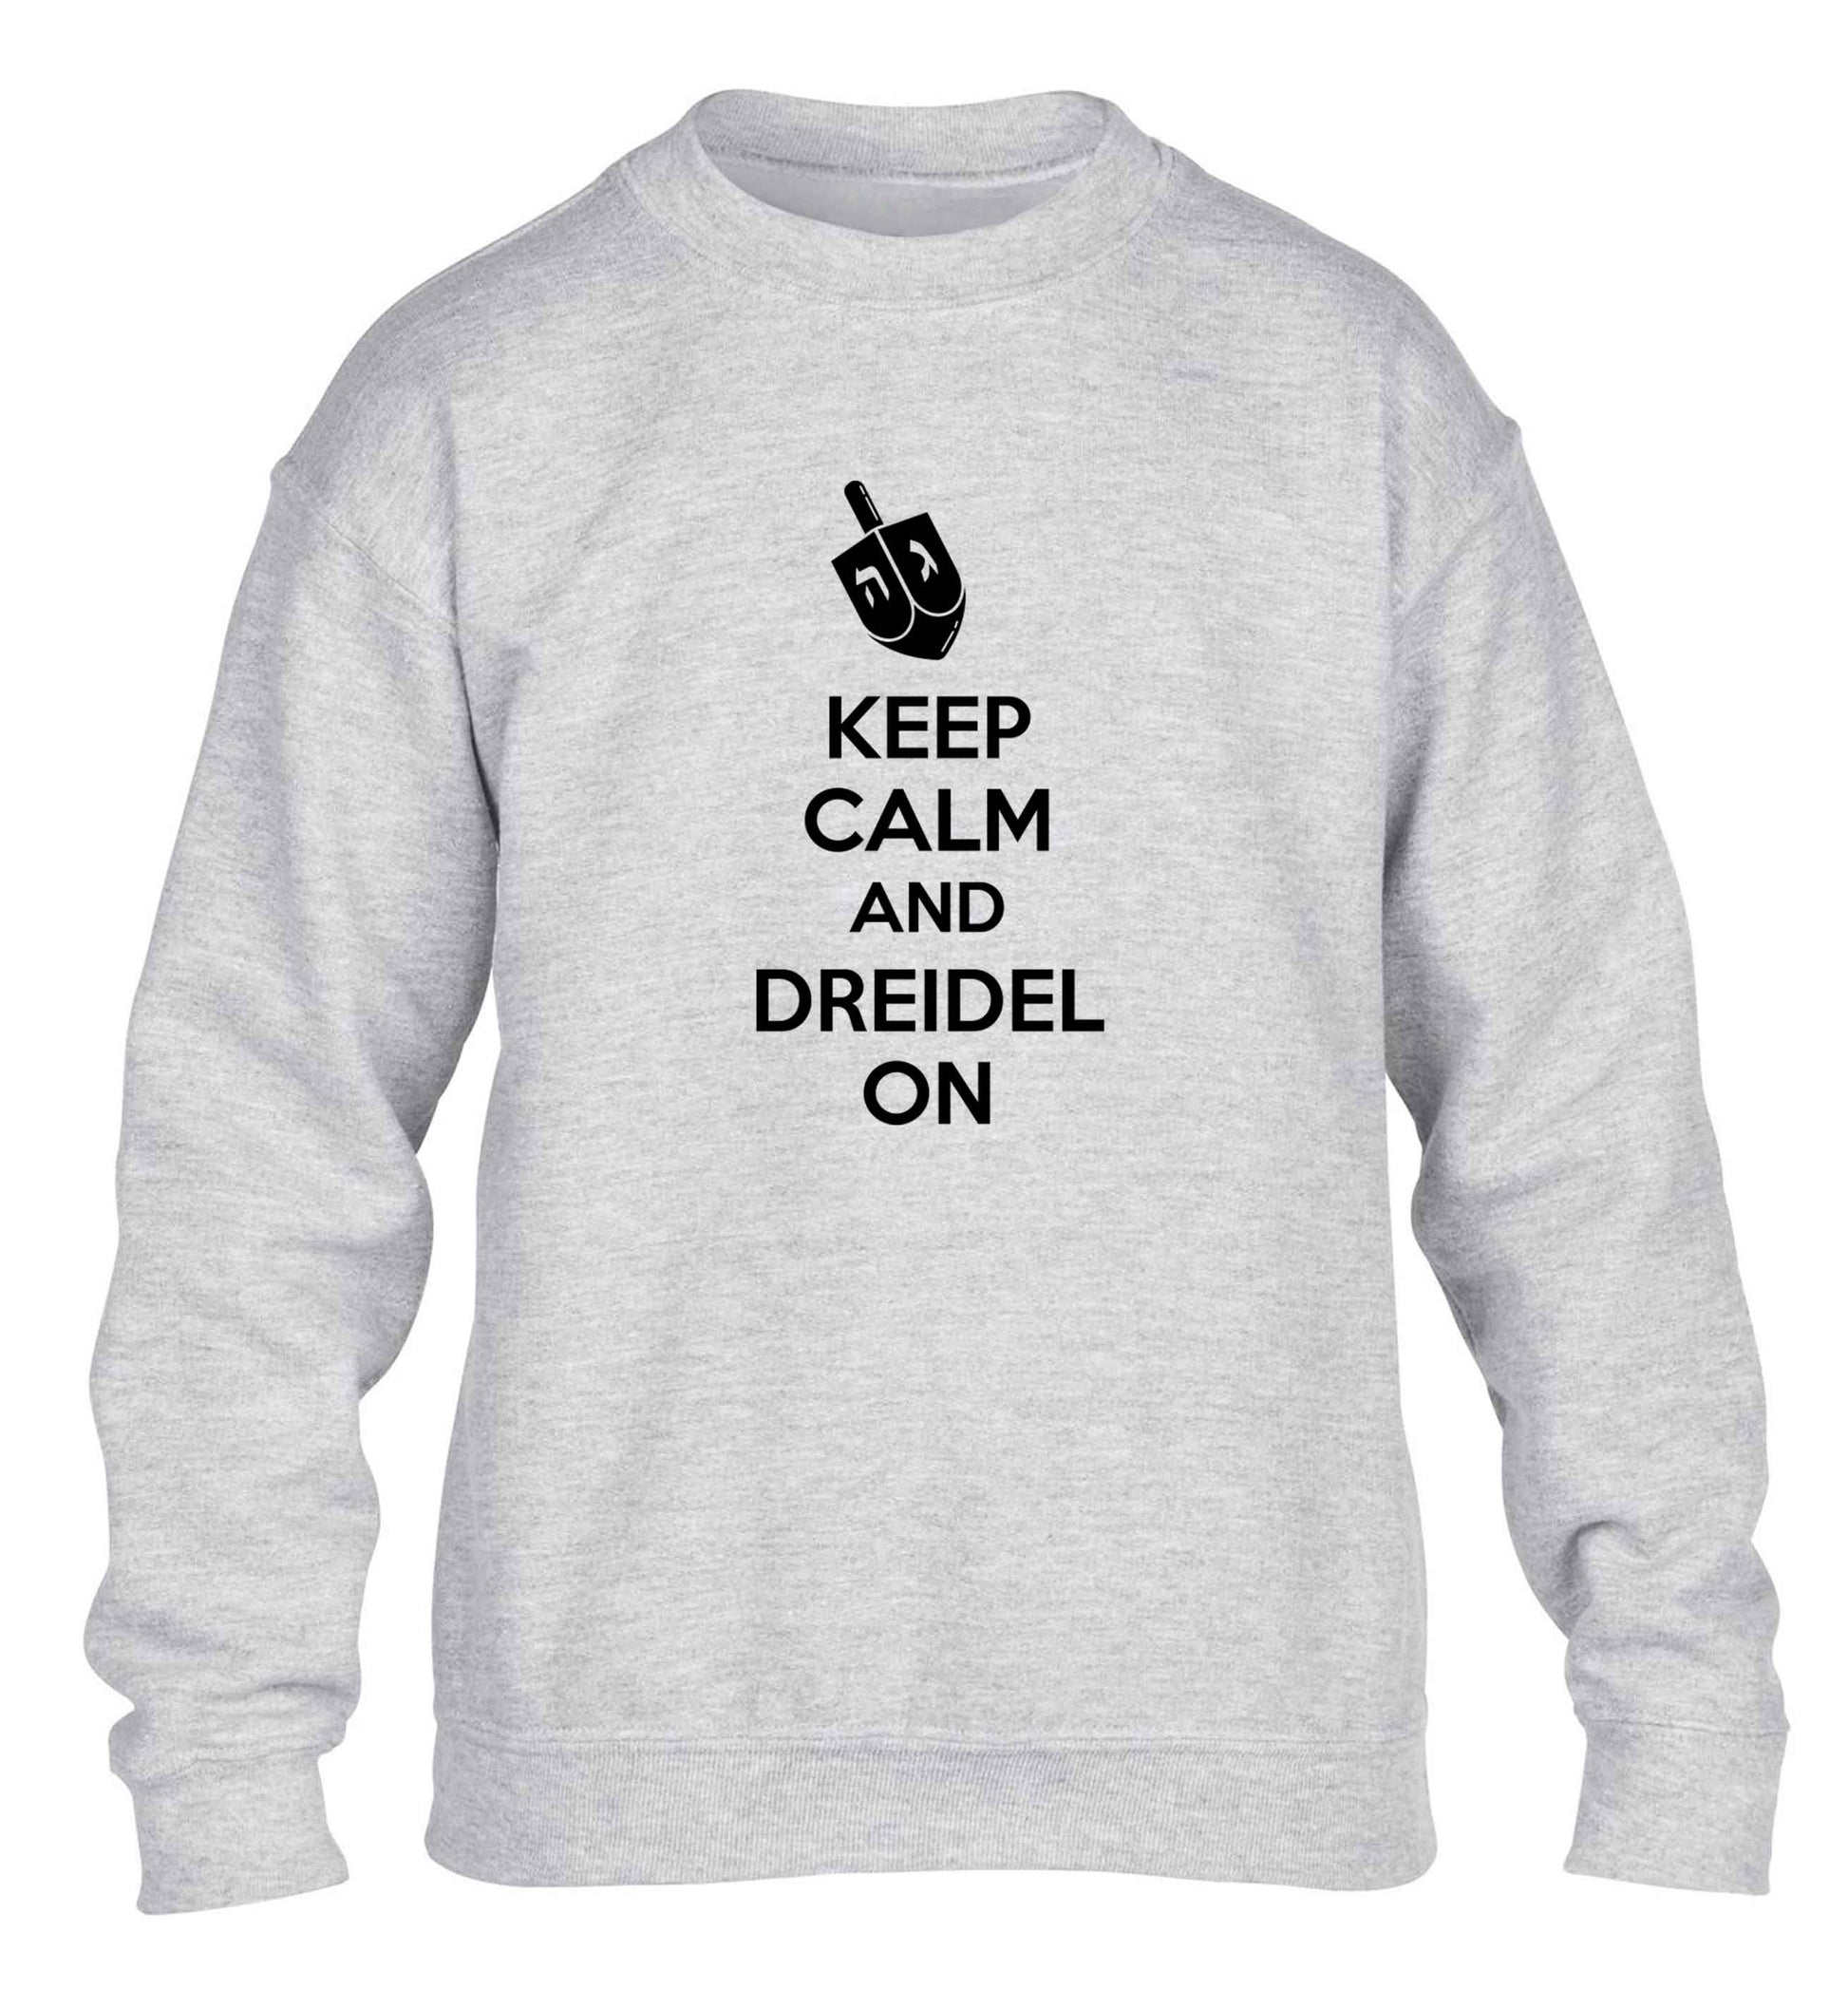 Keep calm and dreidel on children's grey sweater 12-13 Years